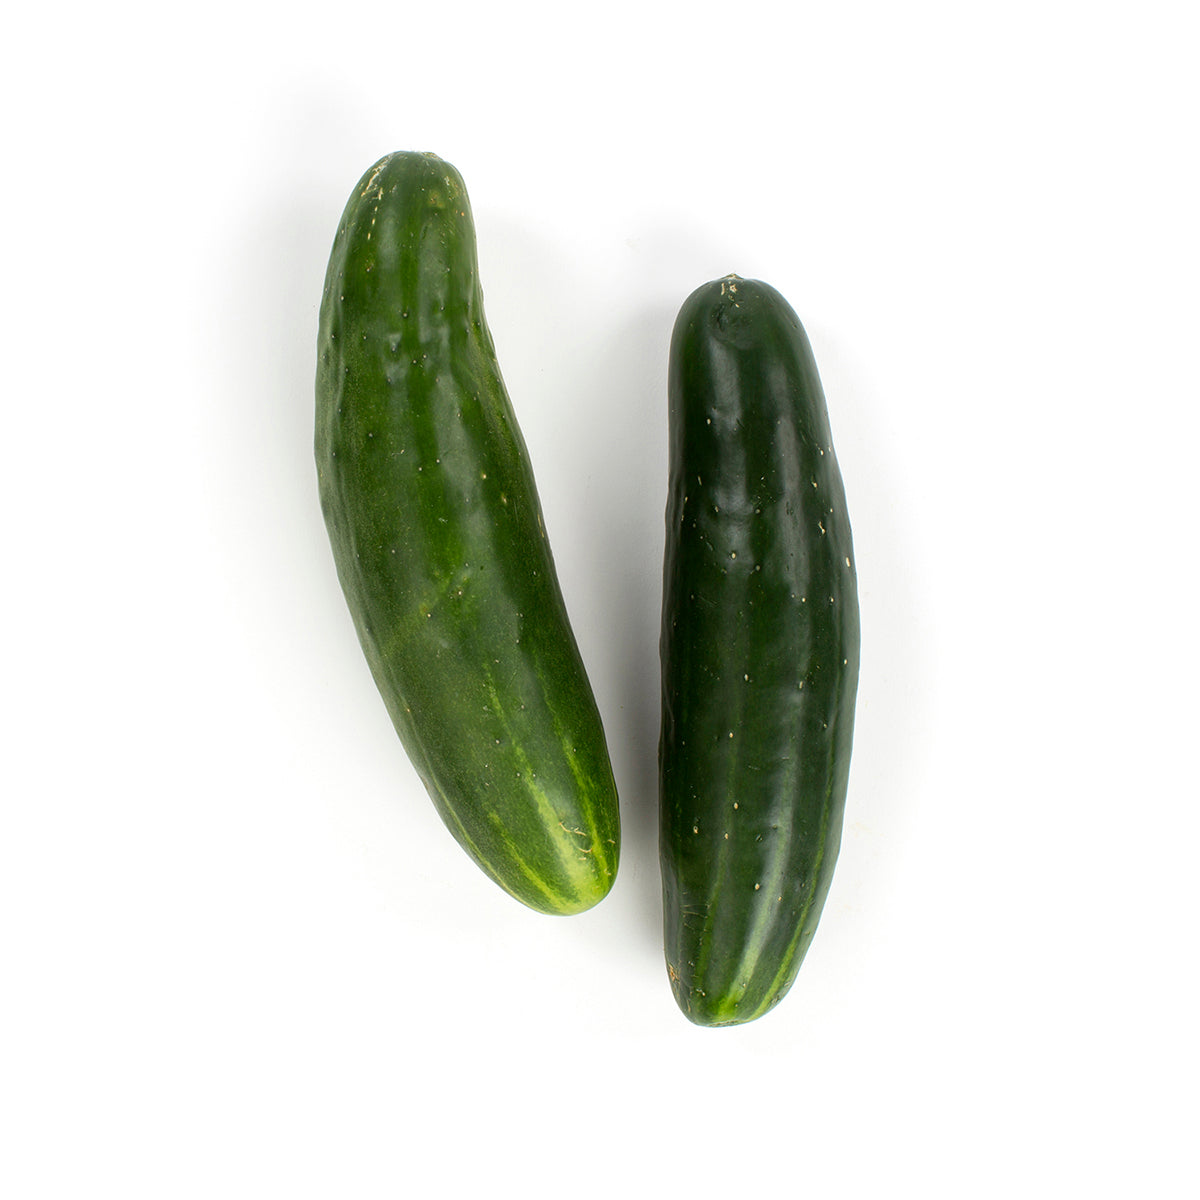 BoxNCase Super Select Slicing Cucumbers